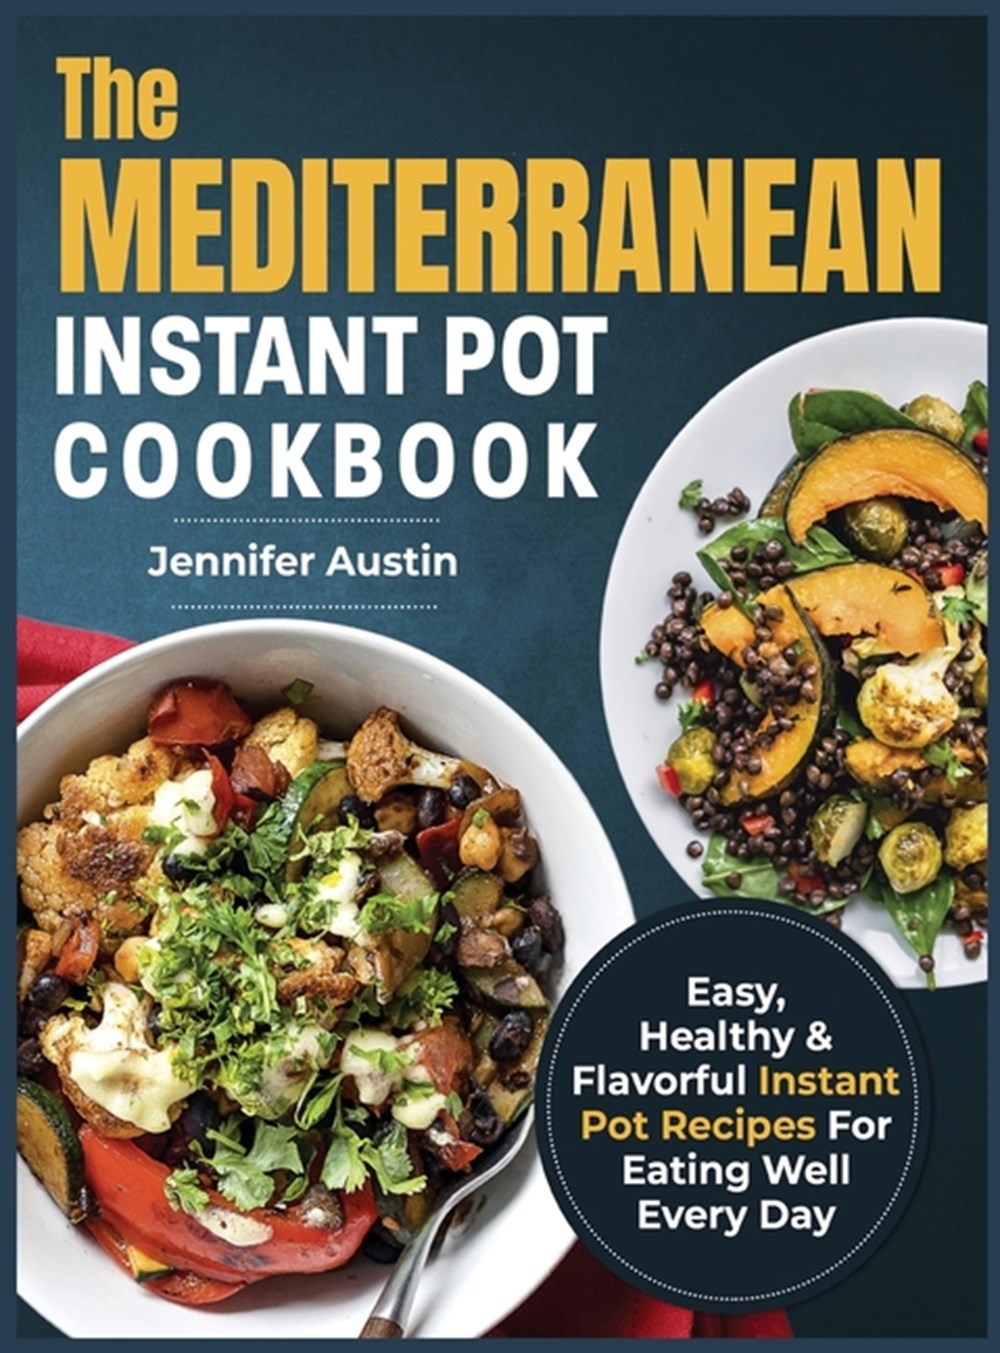 The Mediterranean Instant Pot Cookbook in Hardcover by Jennifer Austin